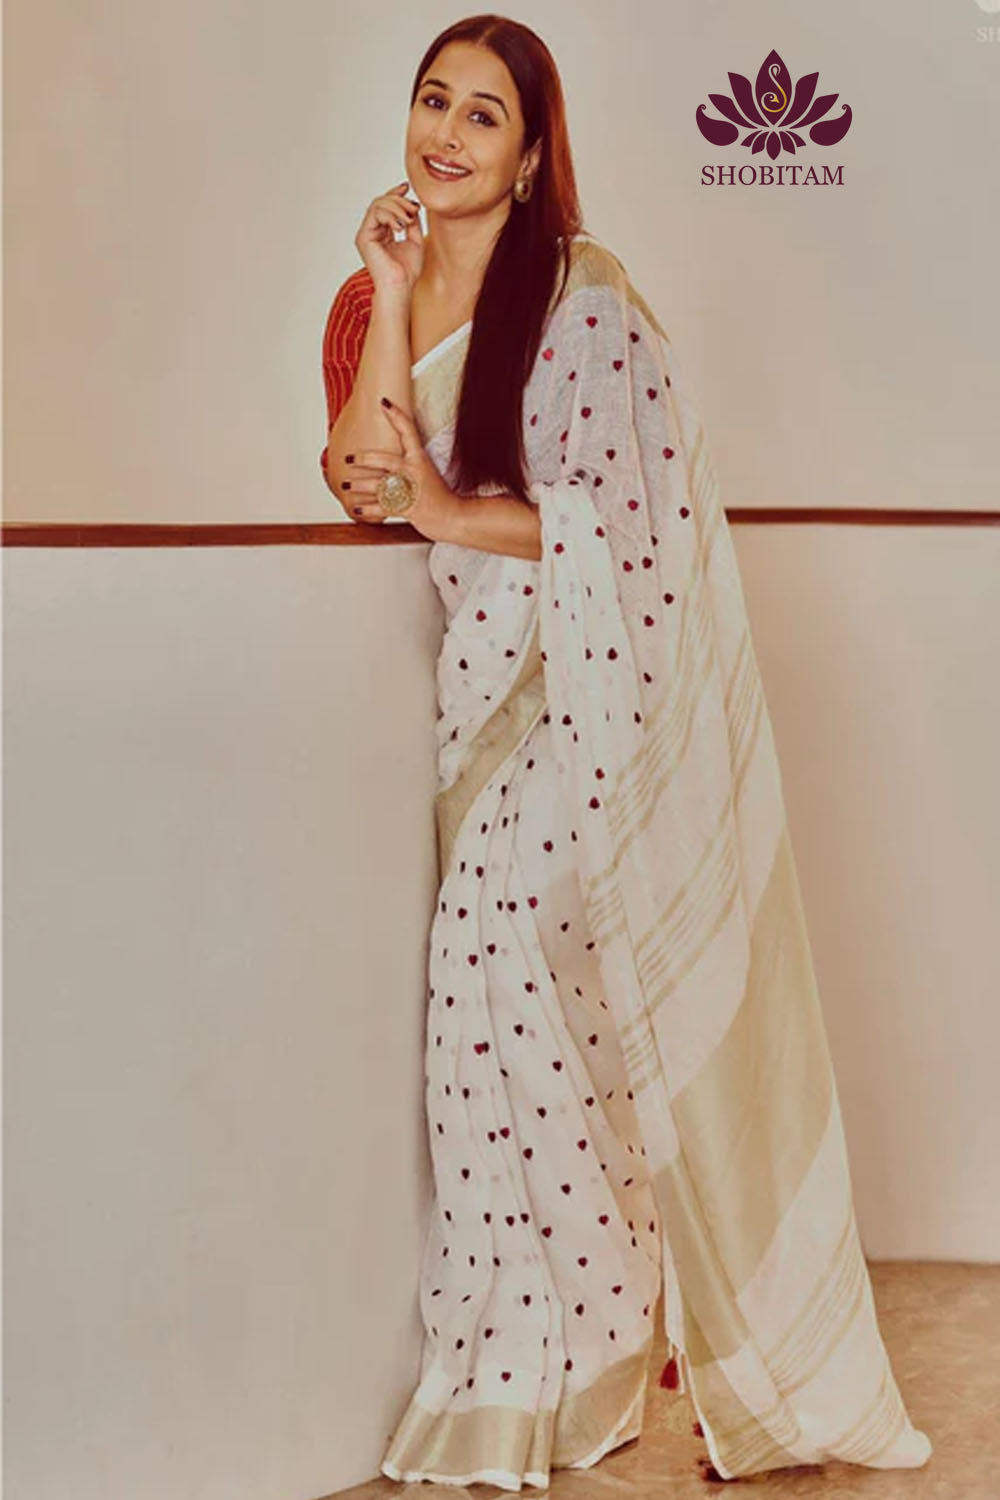 Vidya Balan Shobitam Exclusive Celebrity Loving Hearts Embroidered White Pure Linen Saree